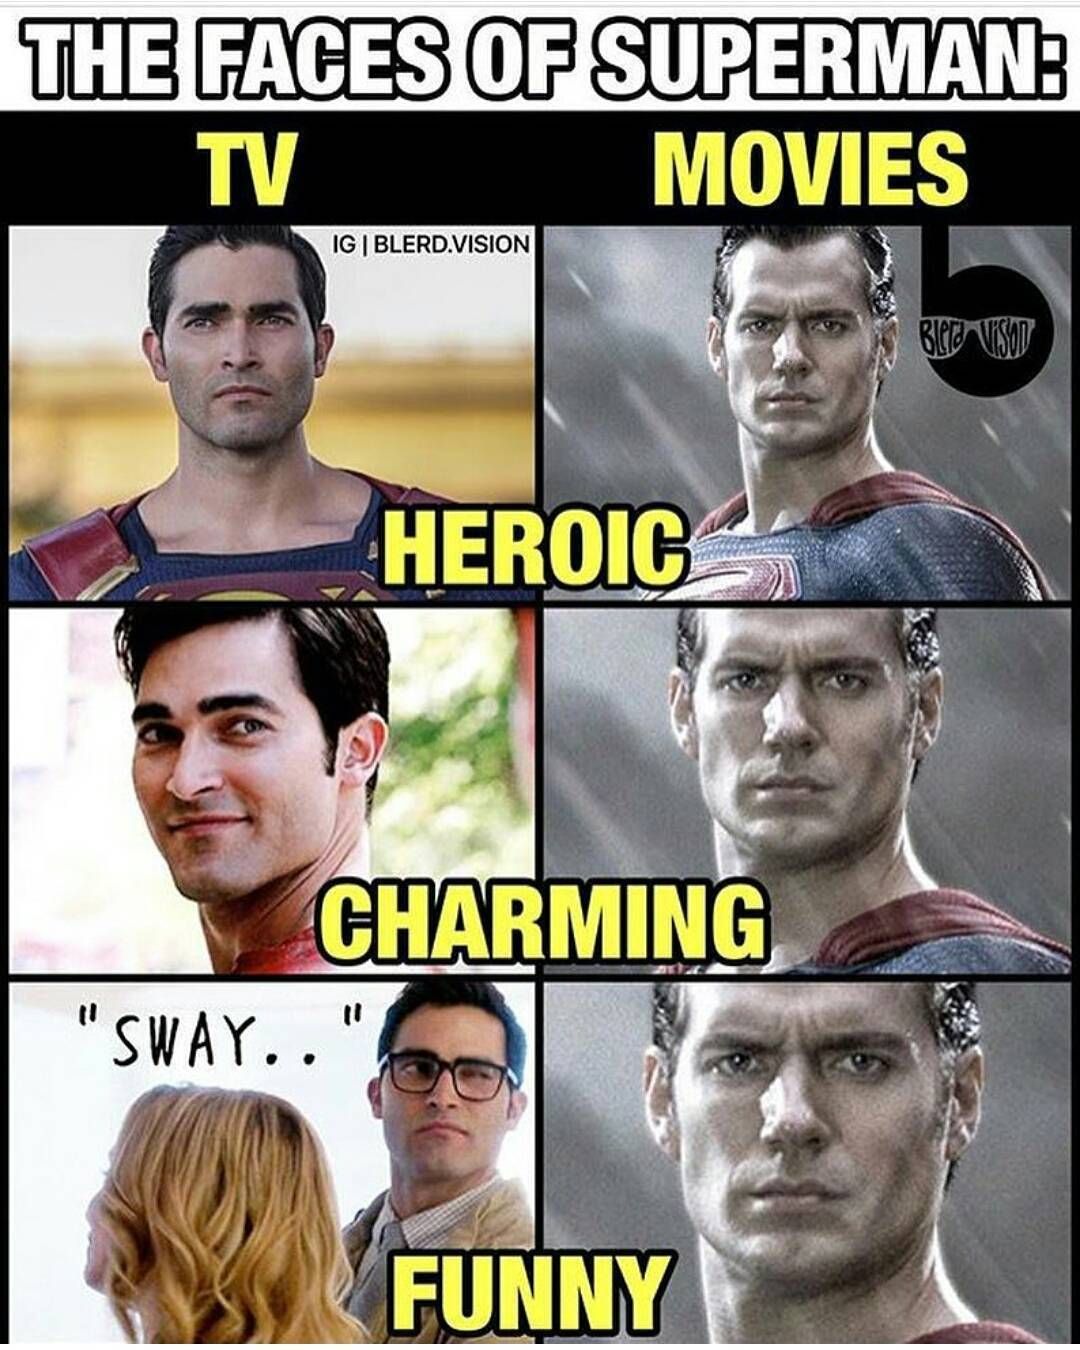 TV Superman is better than Movie Superman